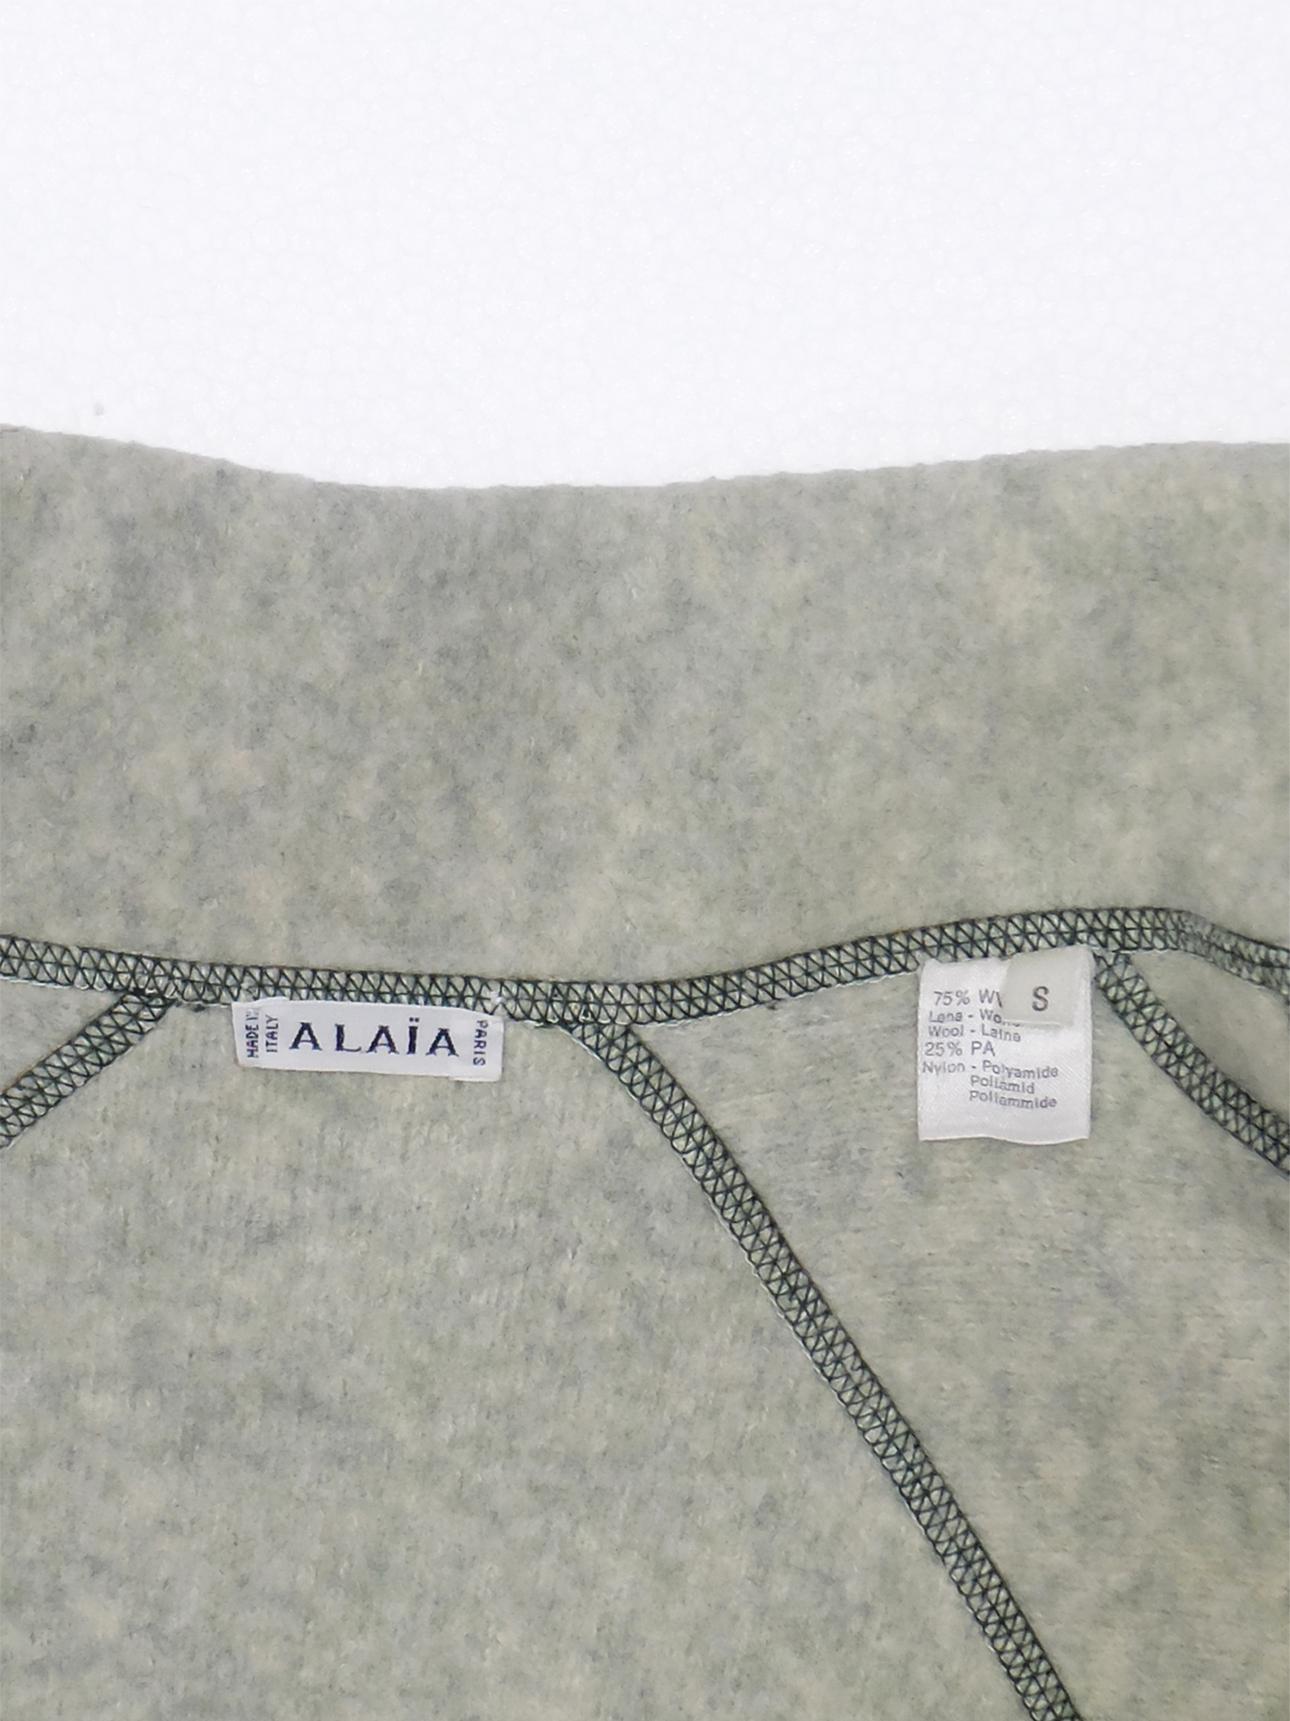 Azzedine Alaïa Fringe Jacket In Excellent Condition For Sale In Shibuya-Ku, 13